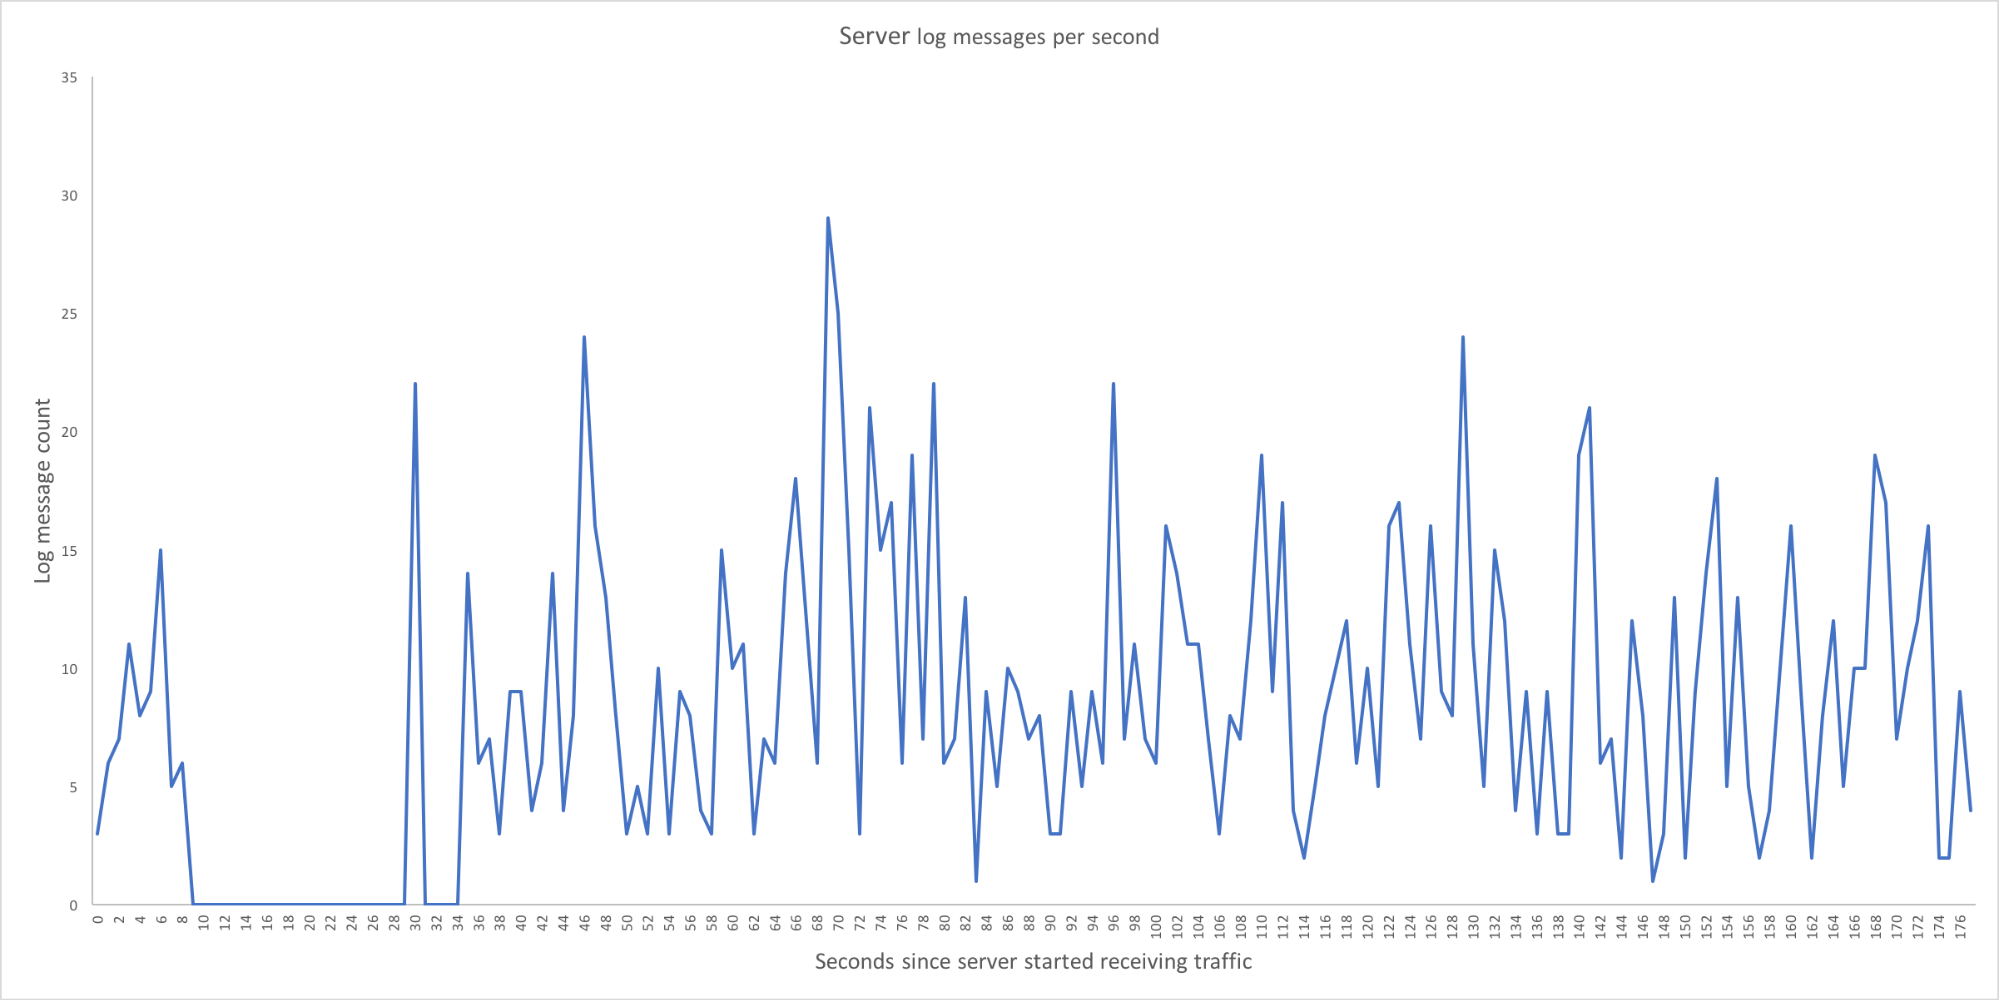 Server log messages per second